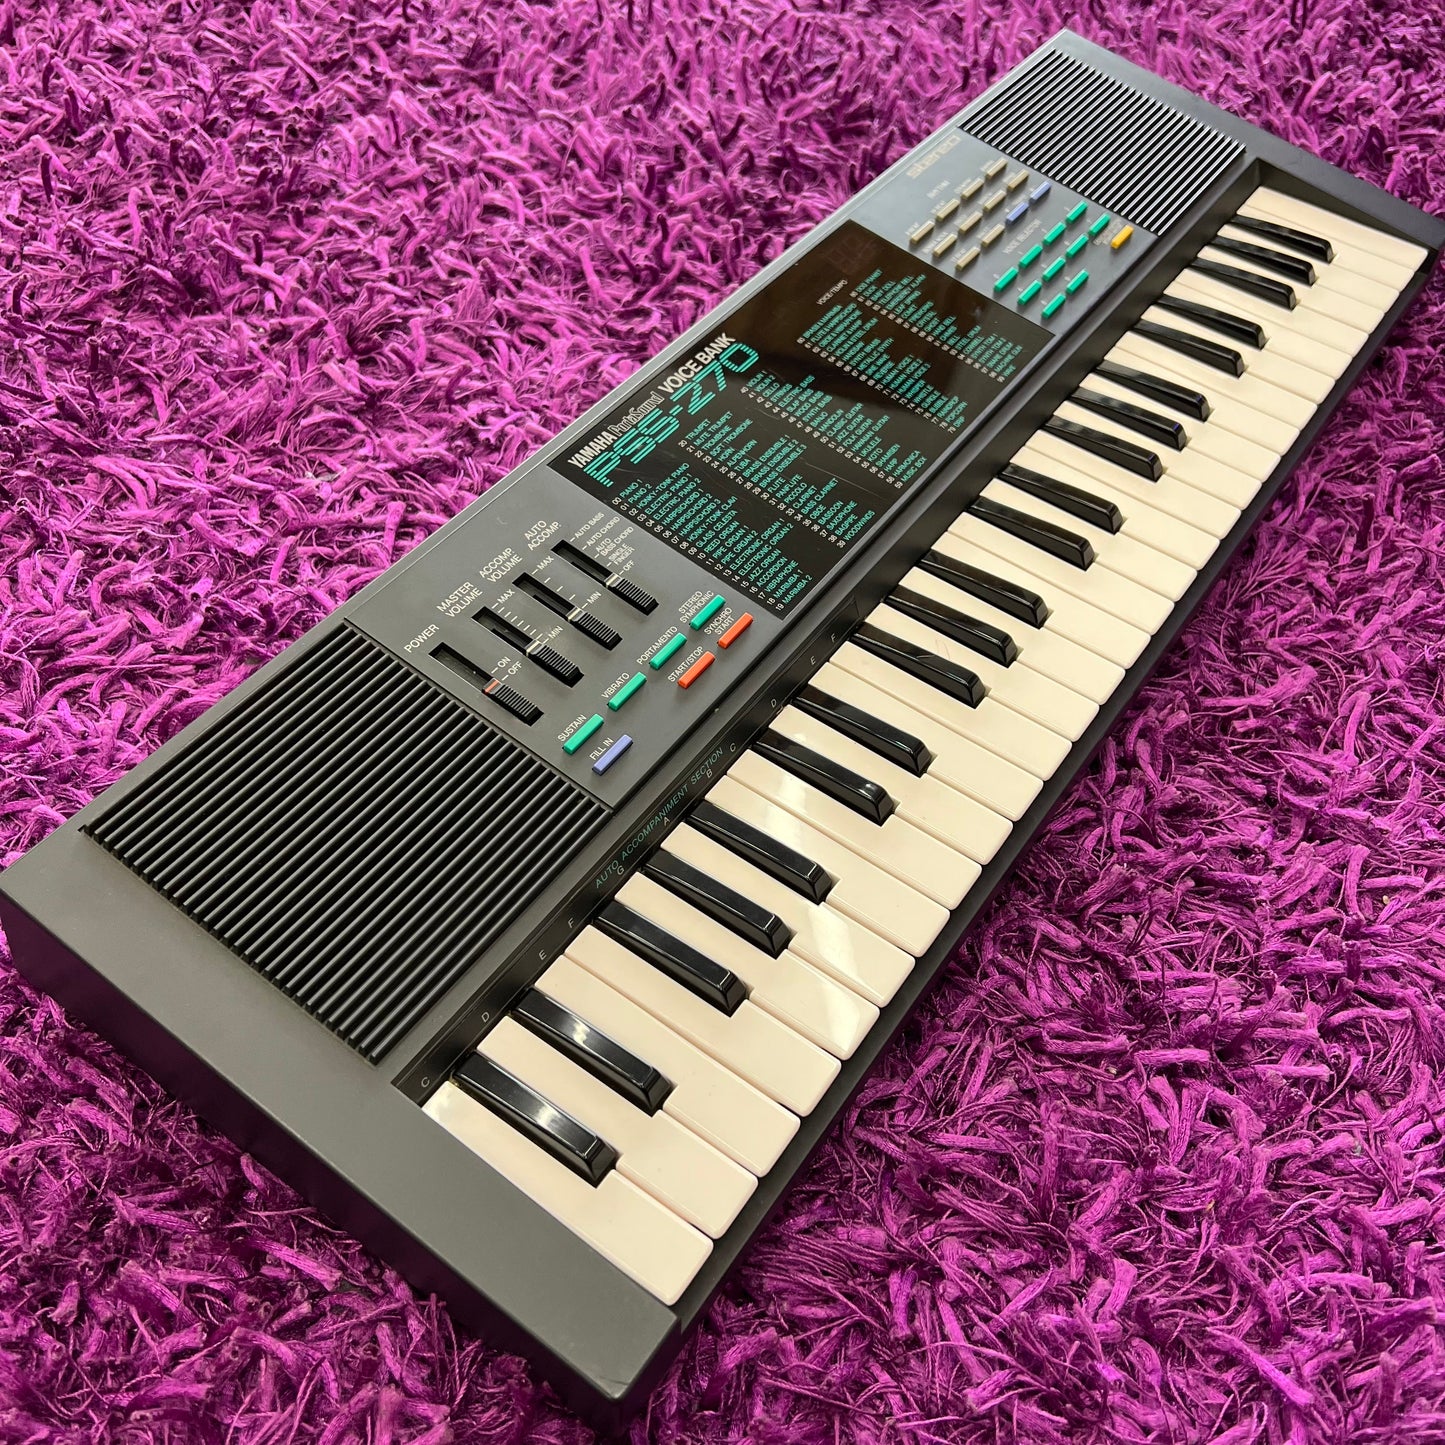 Yamaha PSS-270 PortaSound 80s FM Synthesizer Keyboard